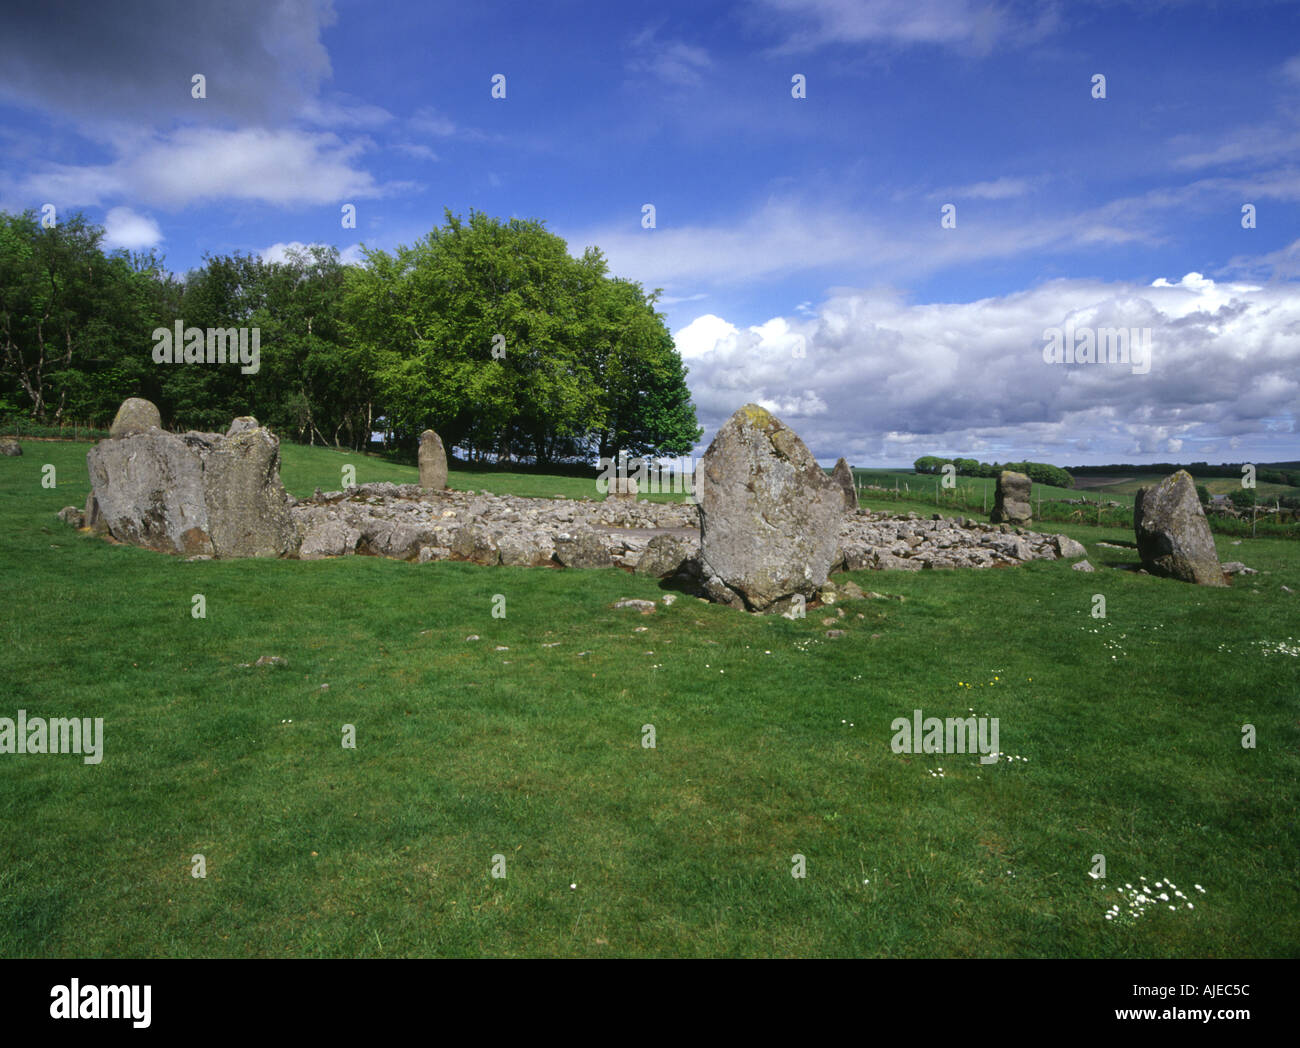 dh Loanhead of Daviot DAVIOT ABERDEENSHIRE Standing stones recumbent stone circle site burial ancient uk bronze age Stock Photo